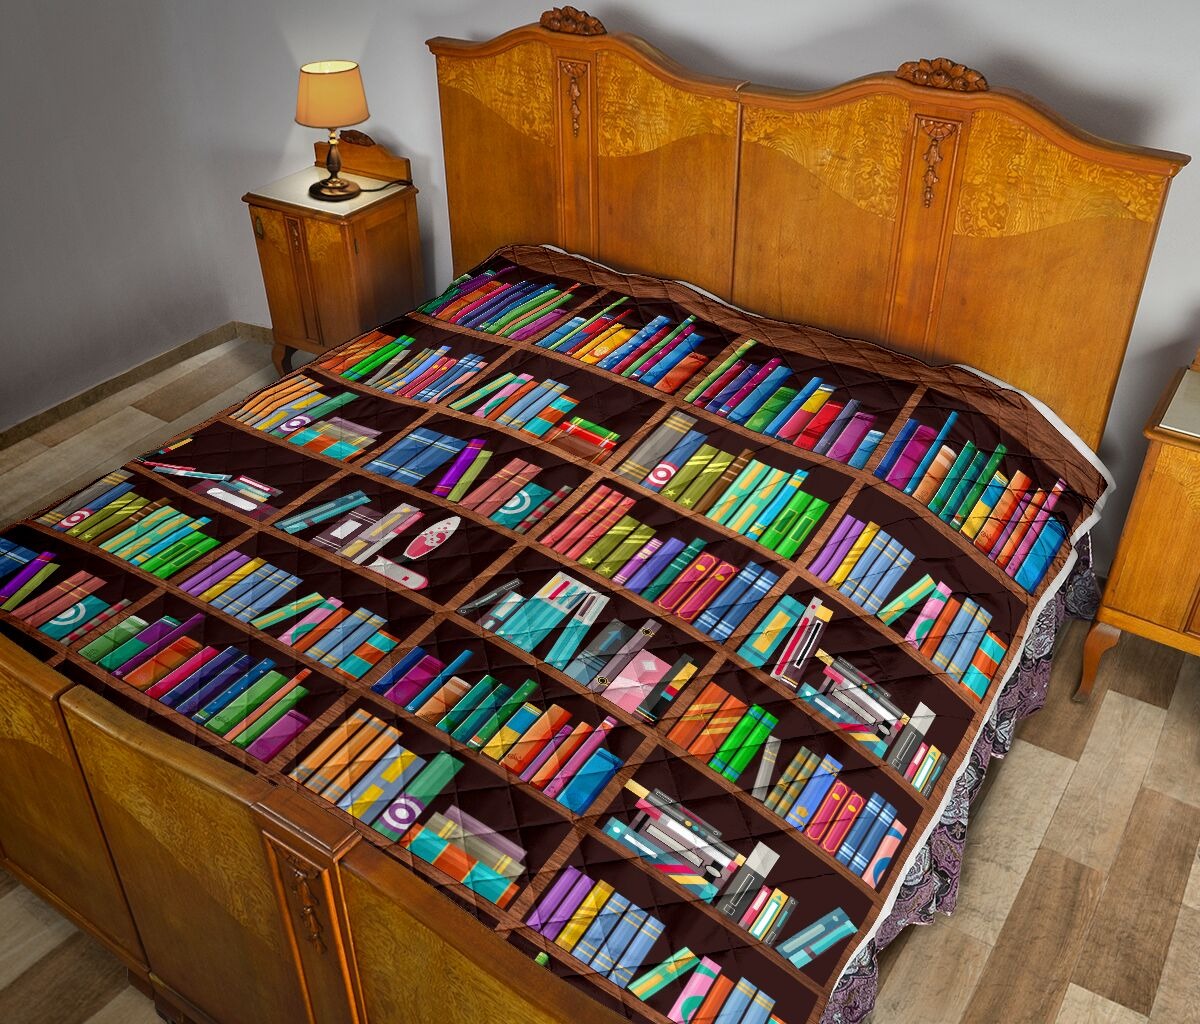 Bookshelf classic quilt blanket